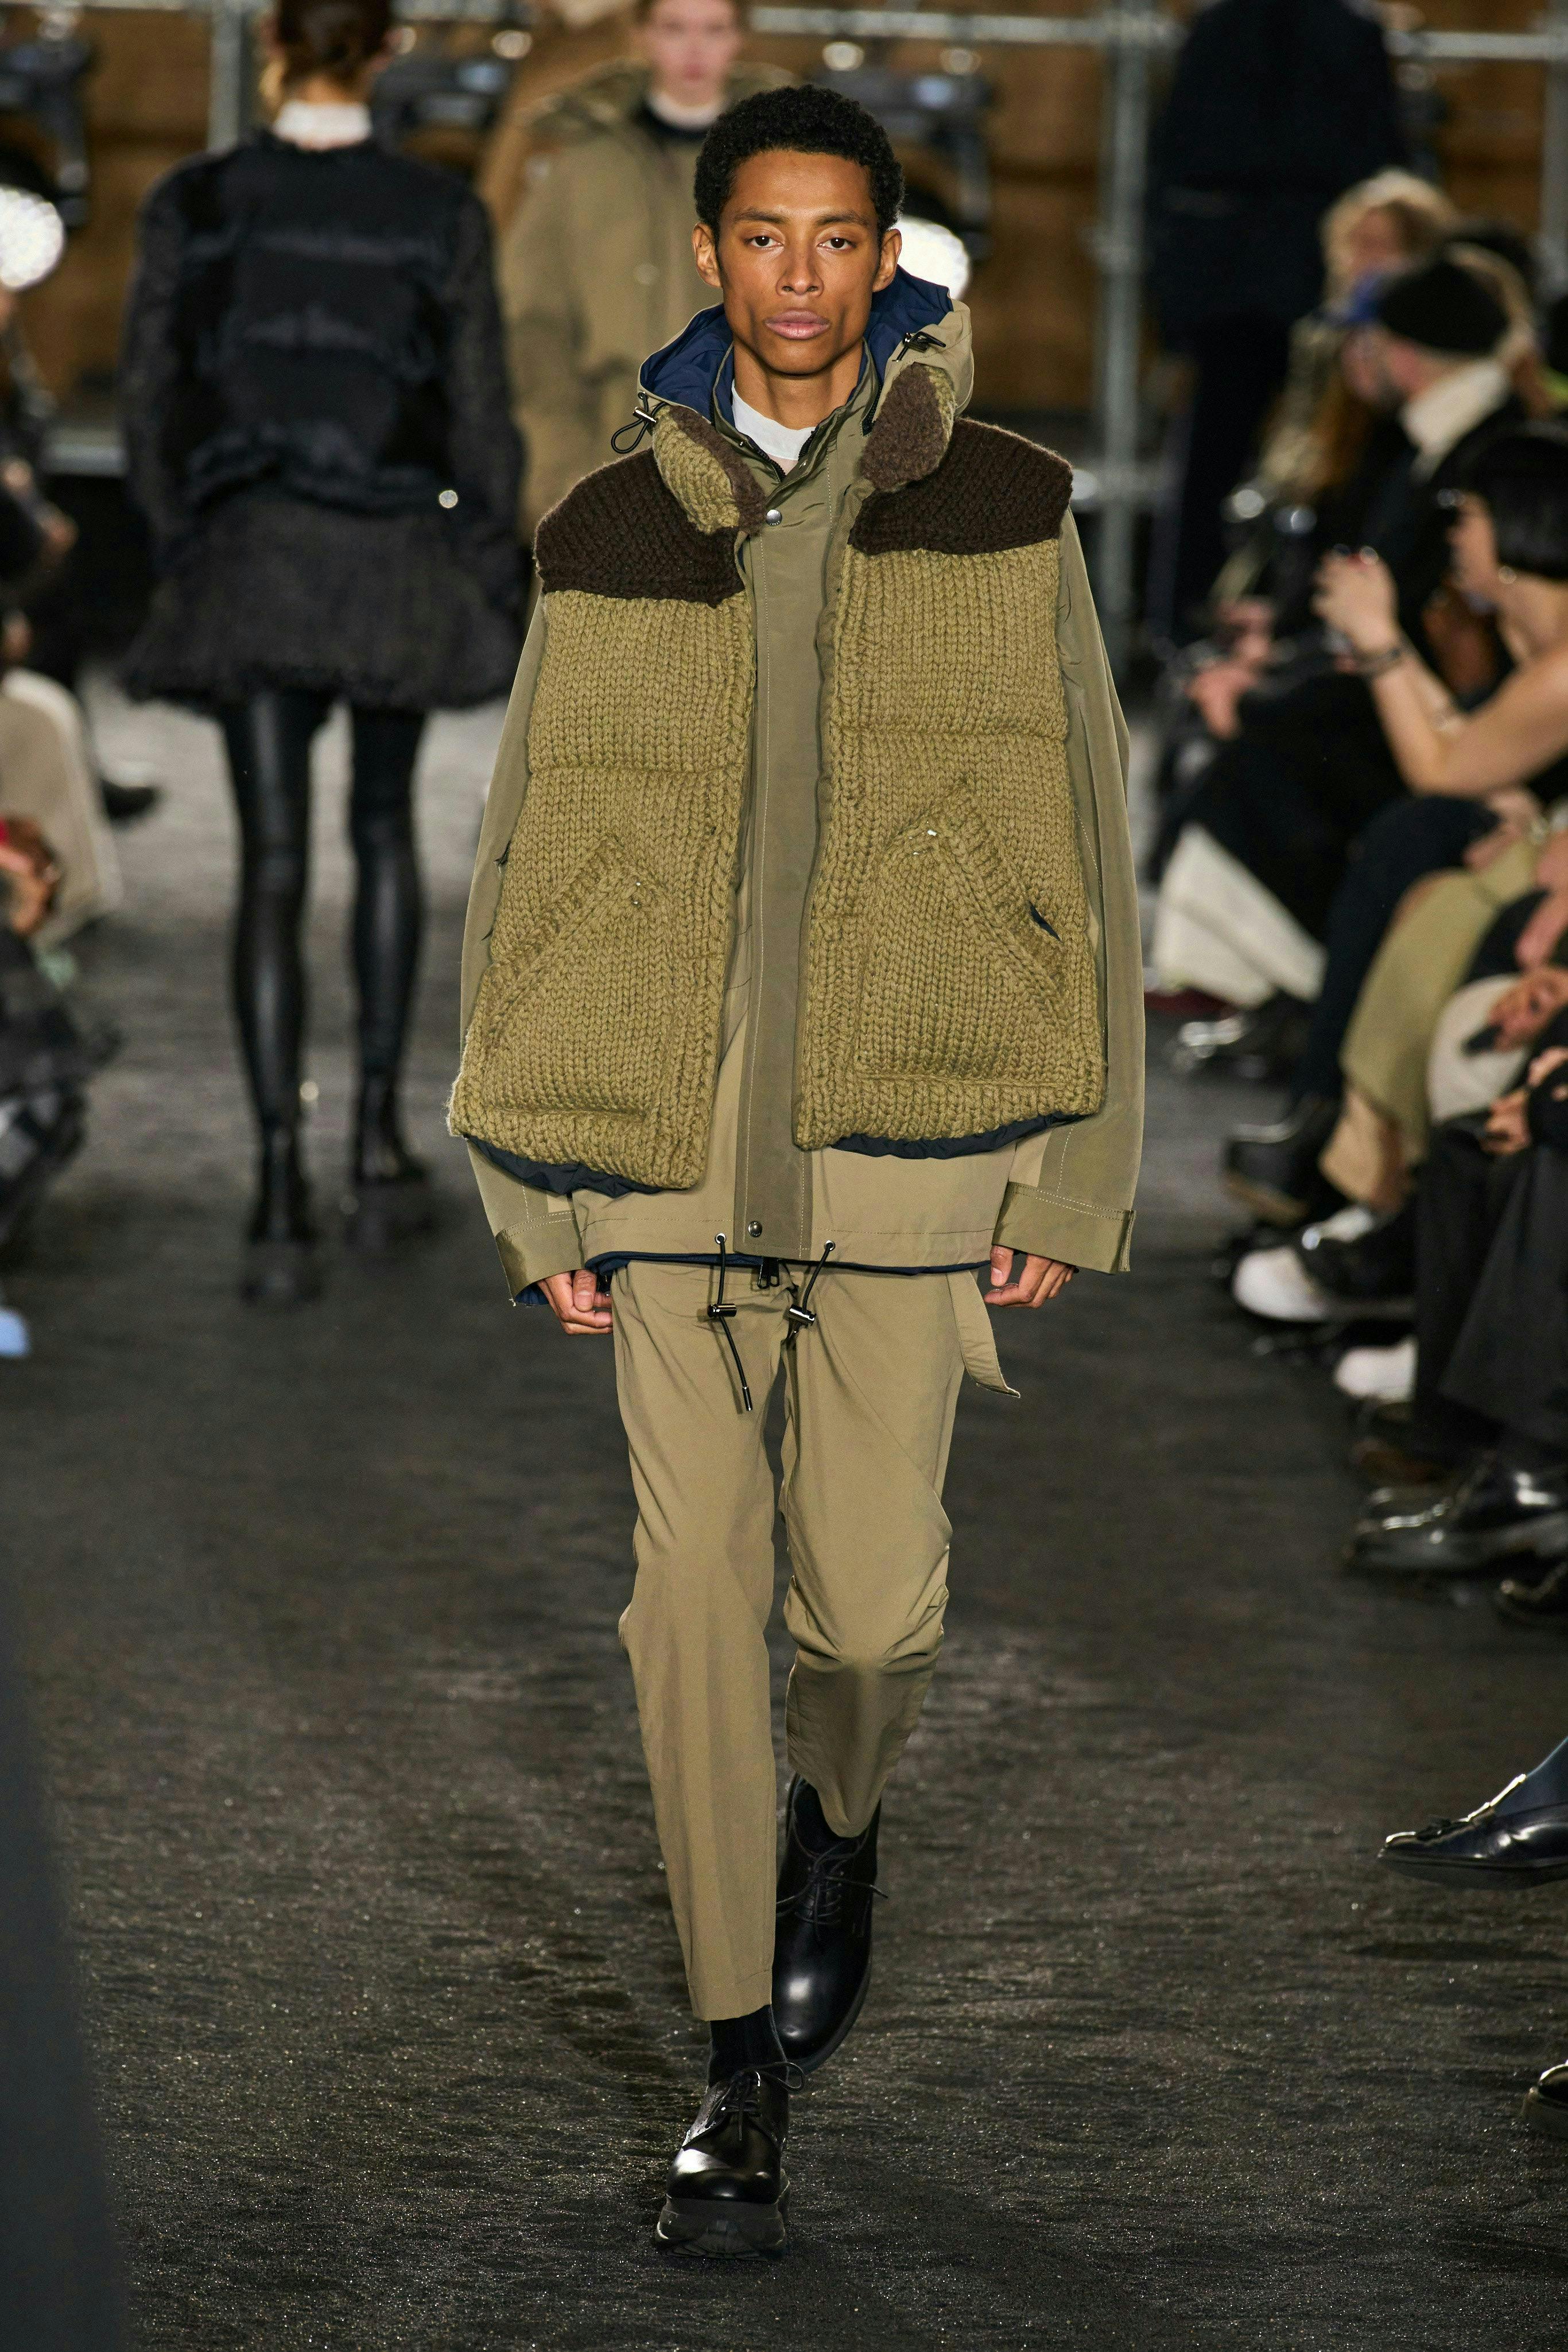 clothing coat fashion adult male man person jacket face shoe